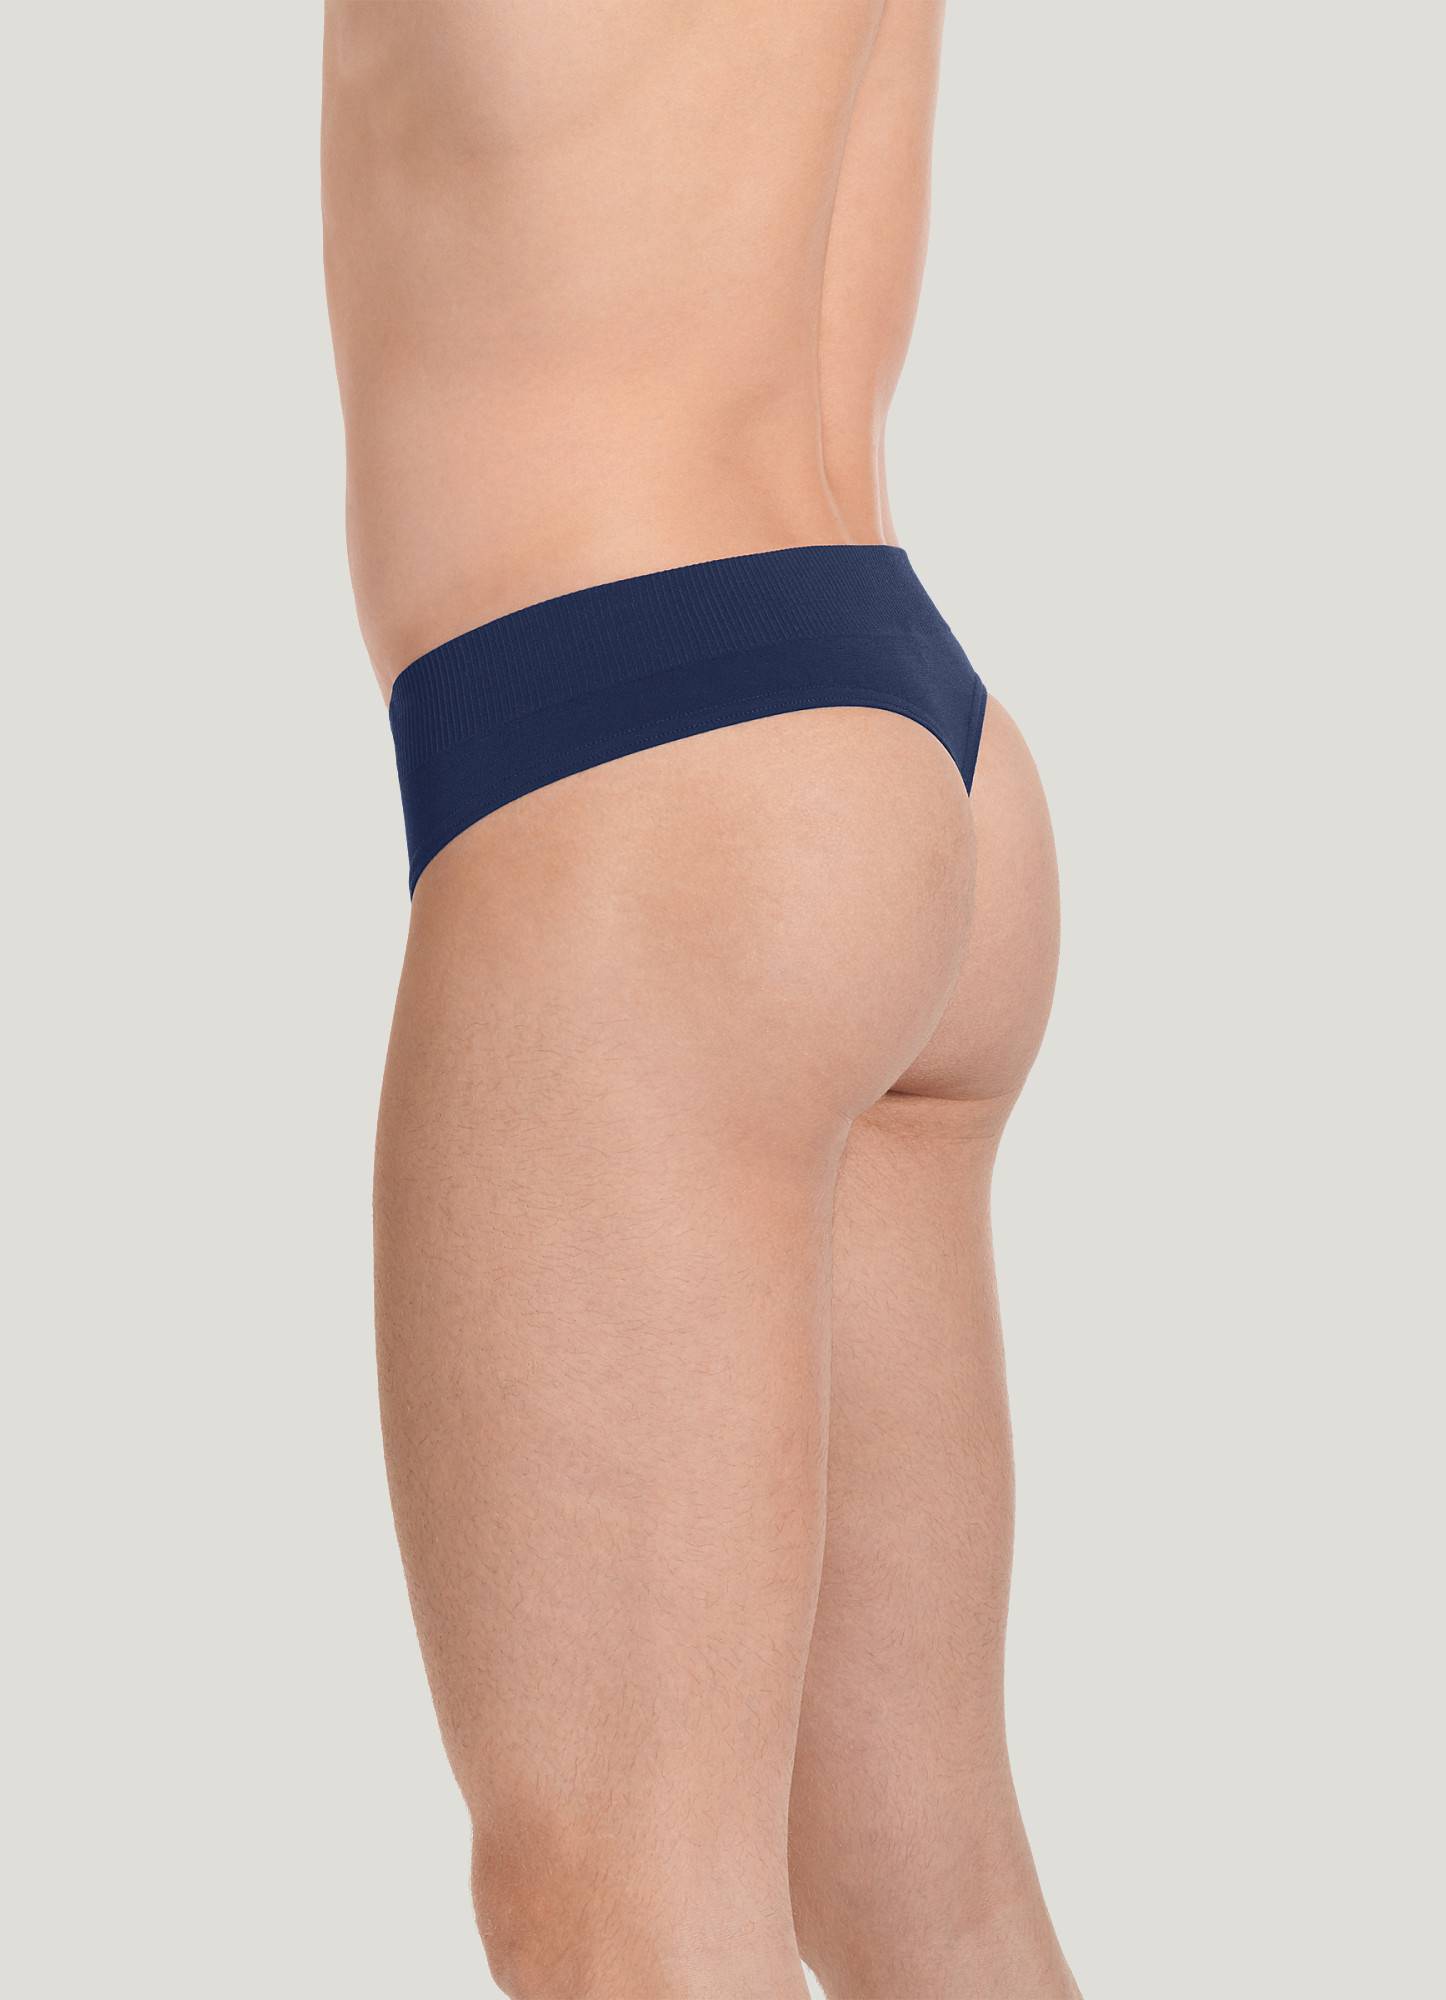 Jockey mens Navy Blue cotton stretch thong underwear size S L XL